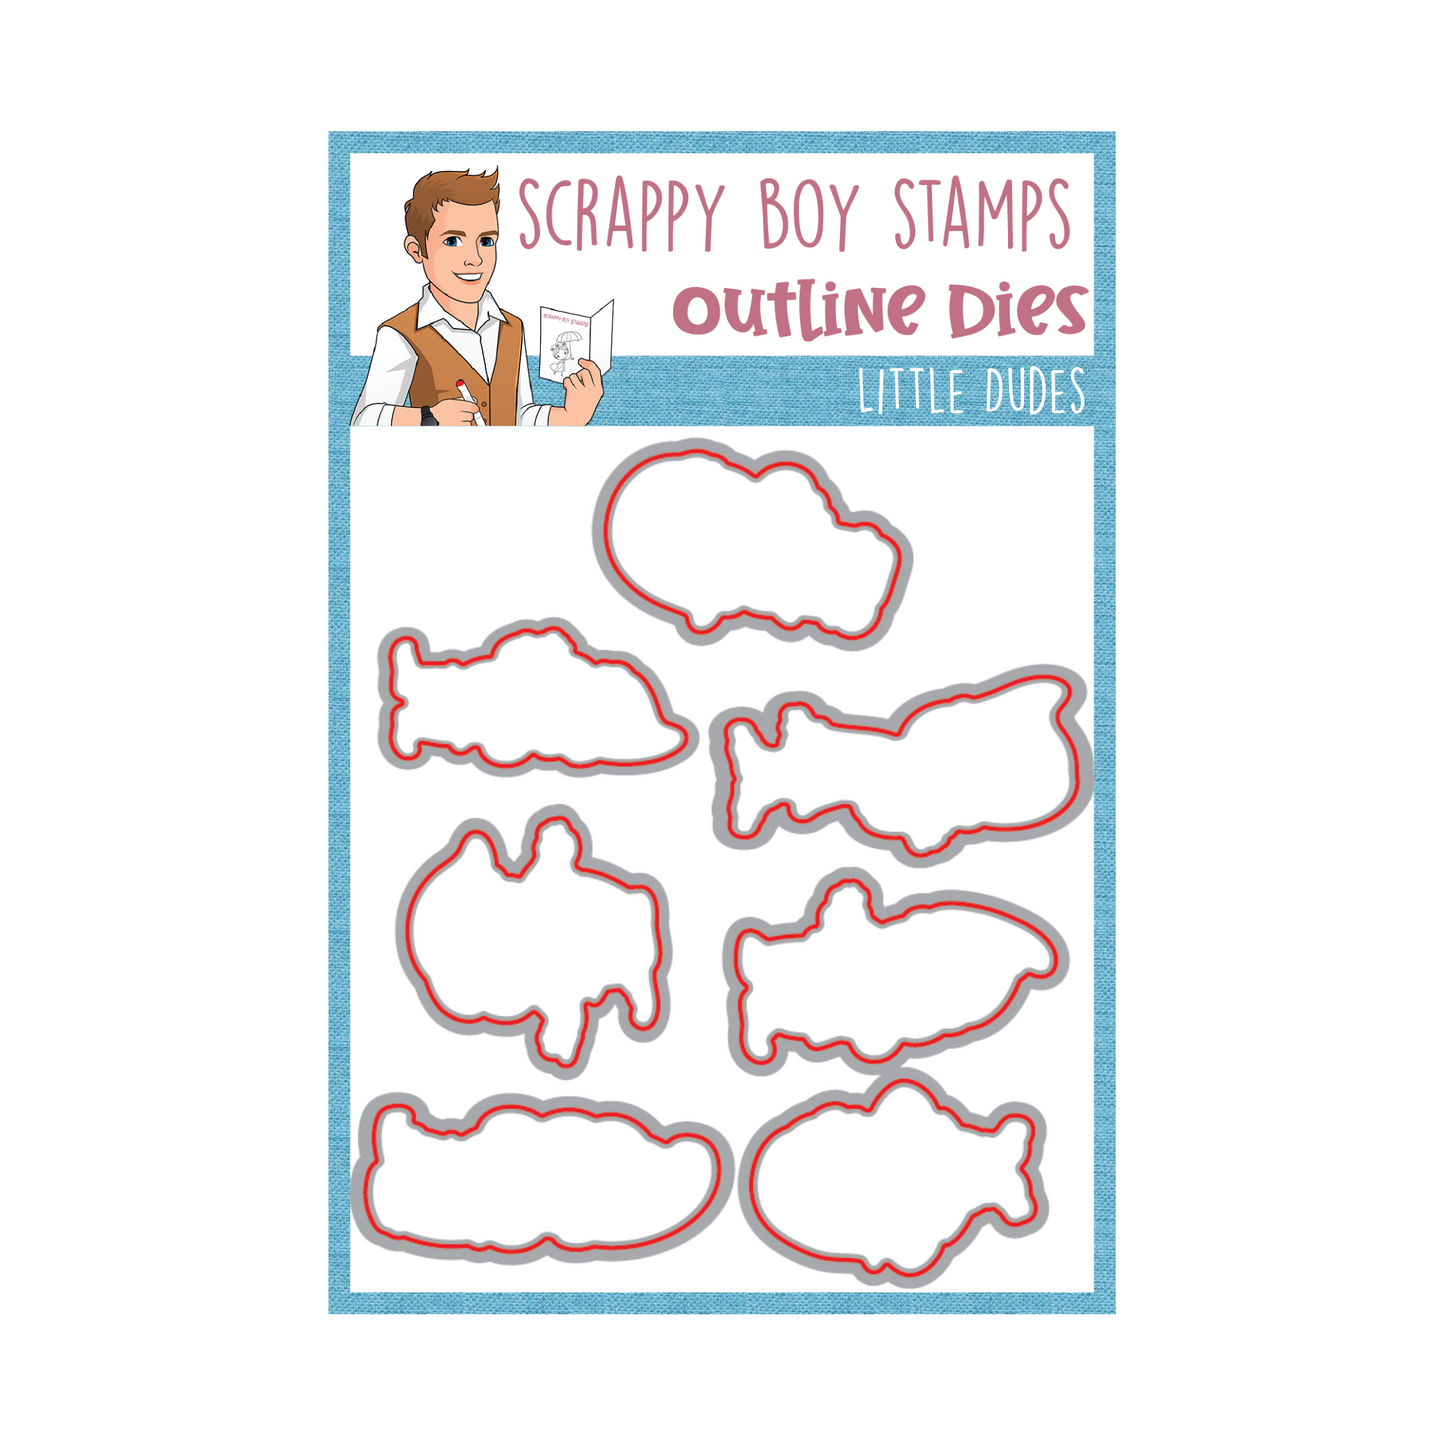 Outline Dies - Little Dudes scrappyboystamps